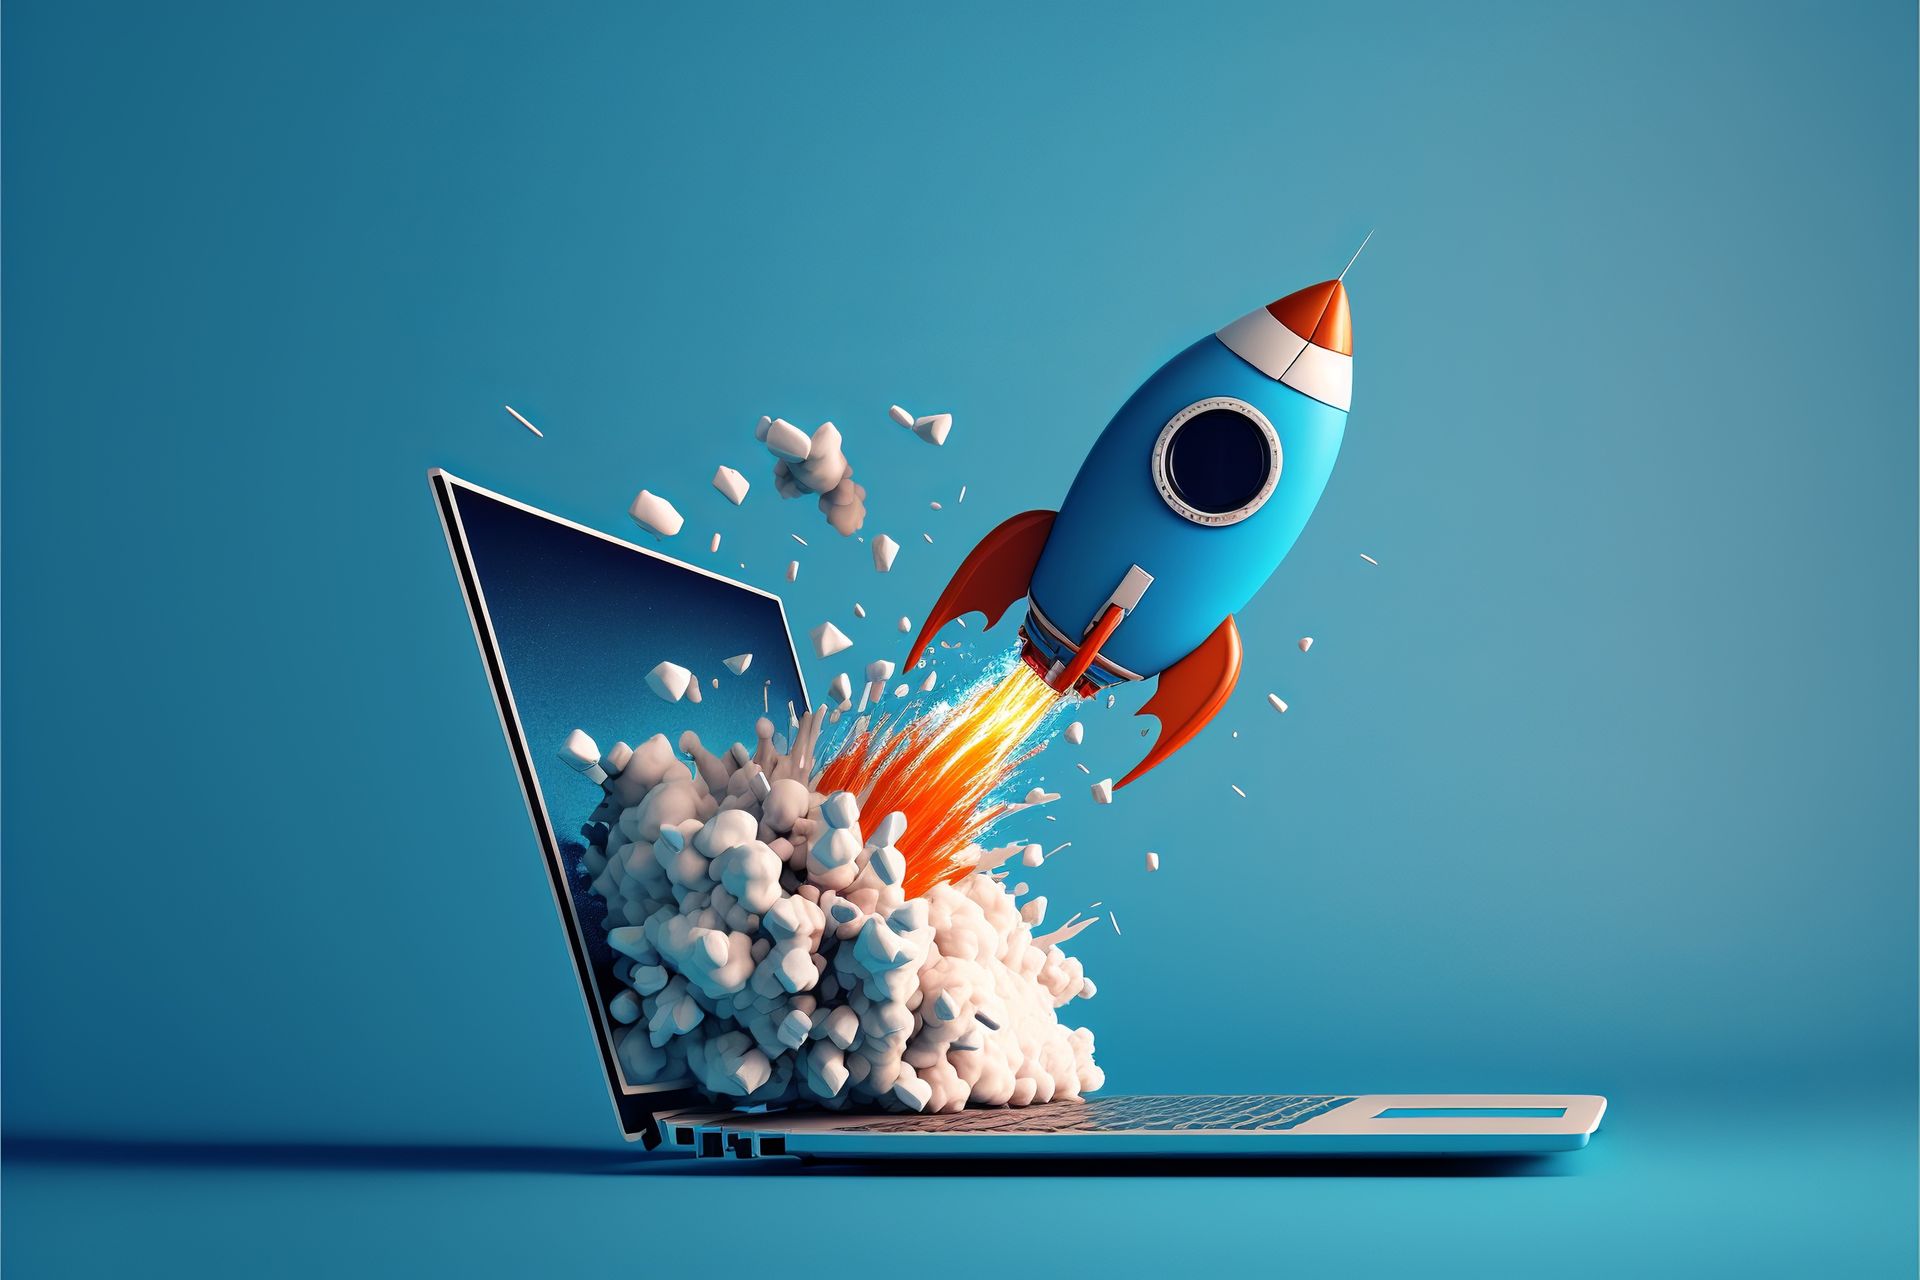 Image of rocket bursting out of laptop